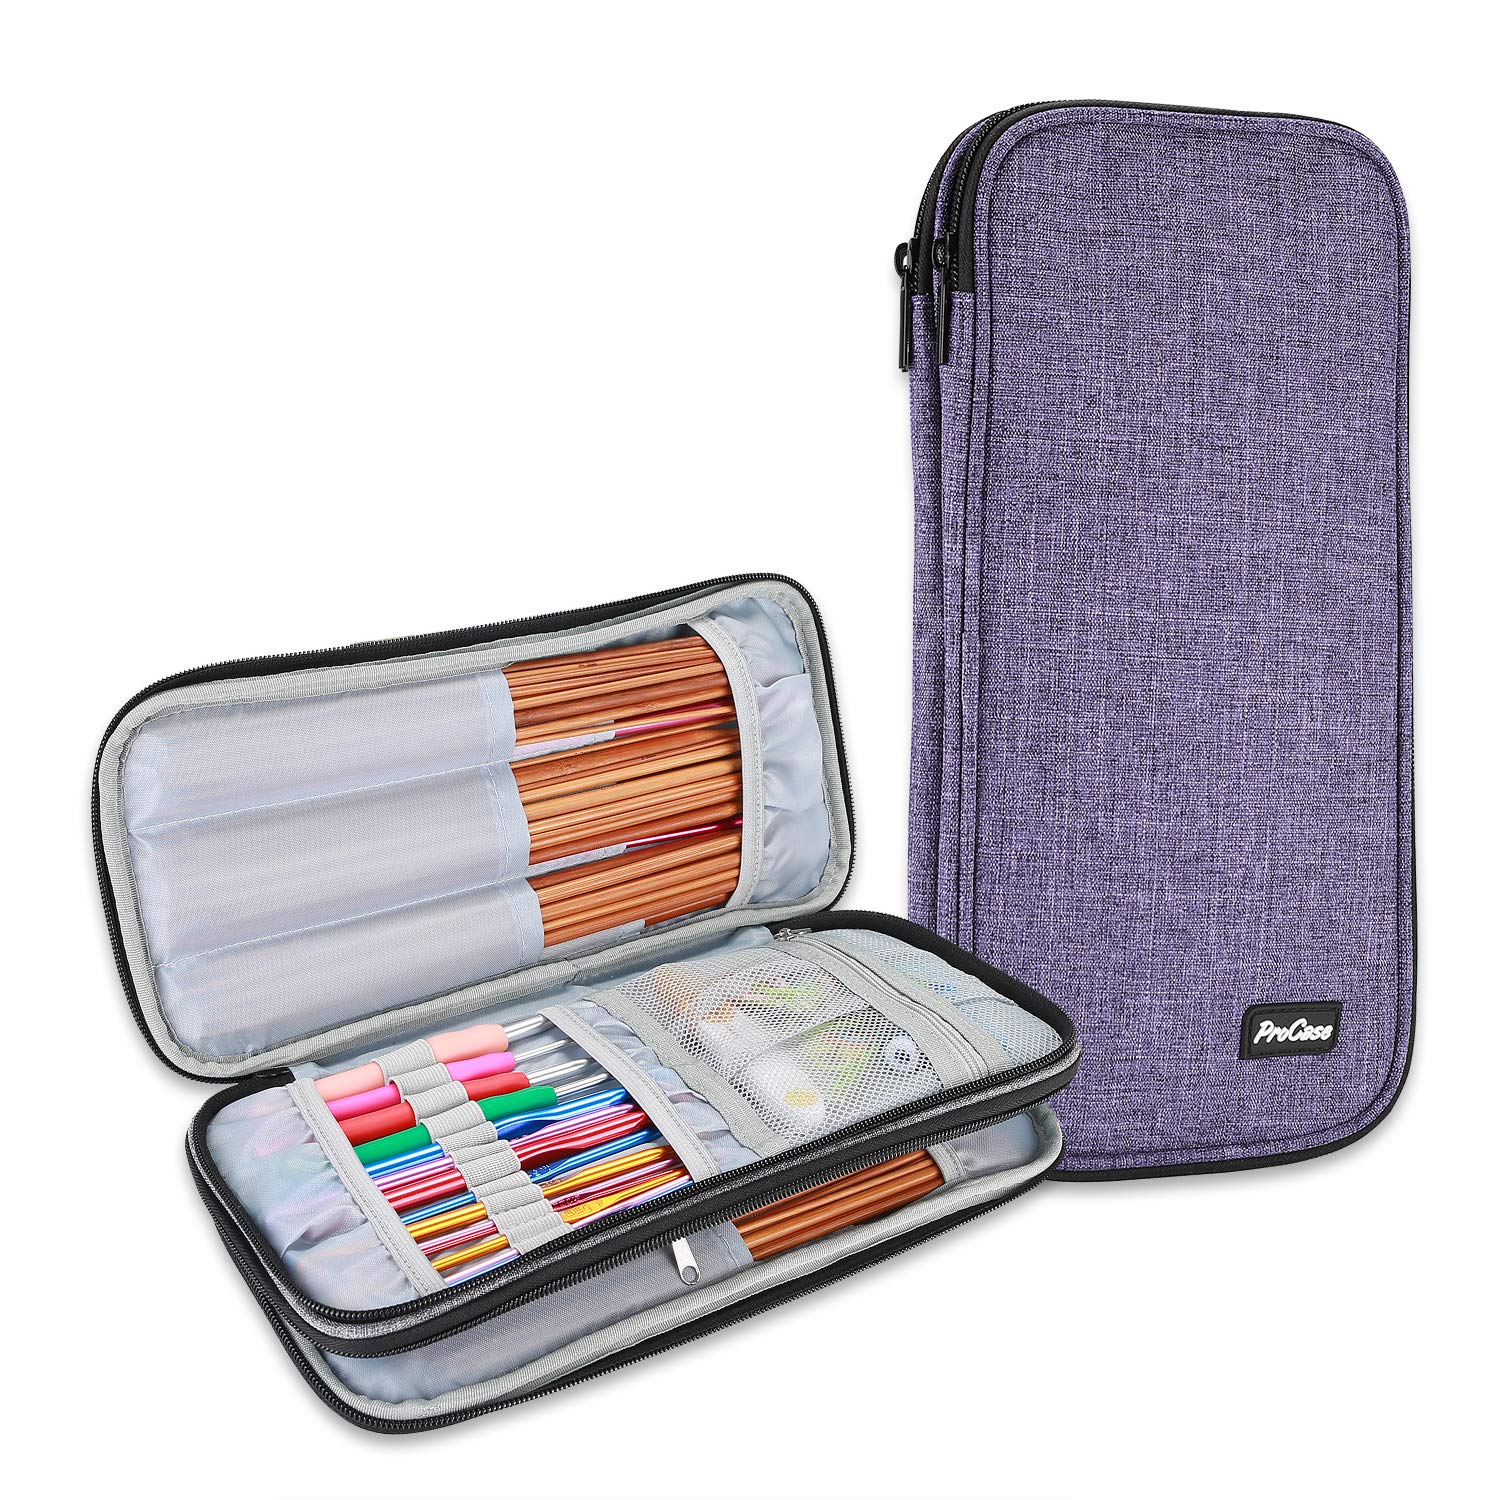 ProCase Knitting Needles Case (up to 11 Inches) Travel Organizer